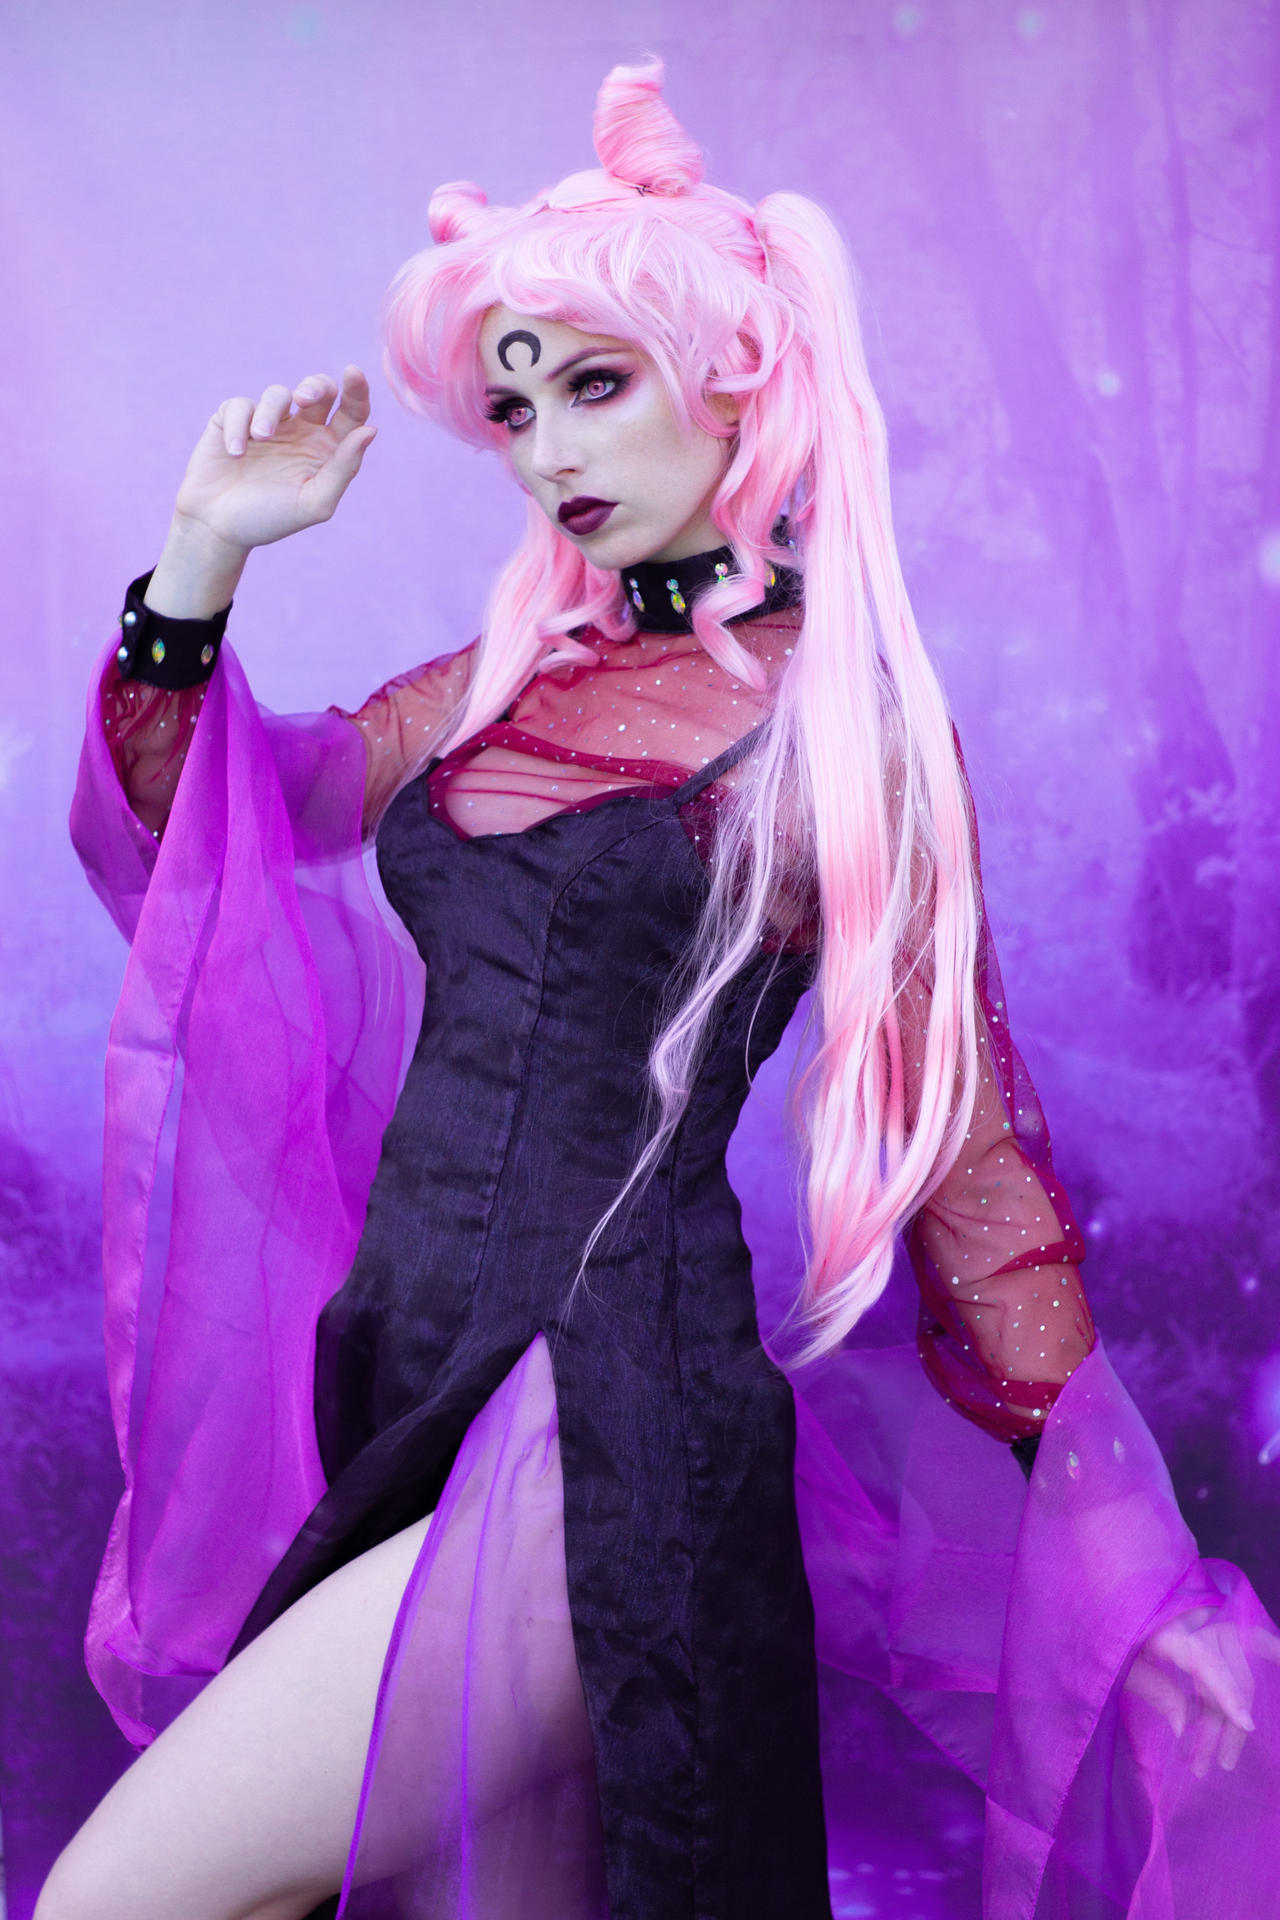 Dark lady cosplay